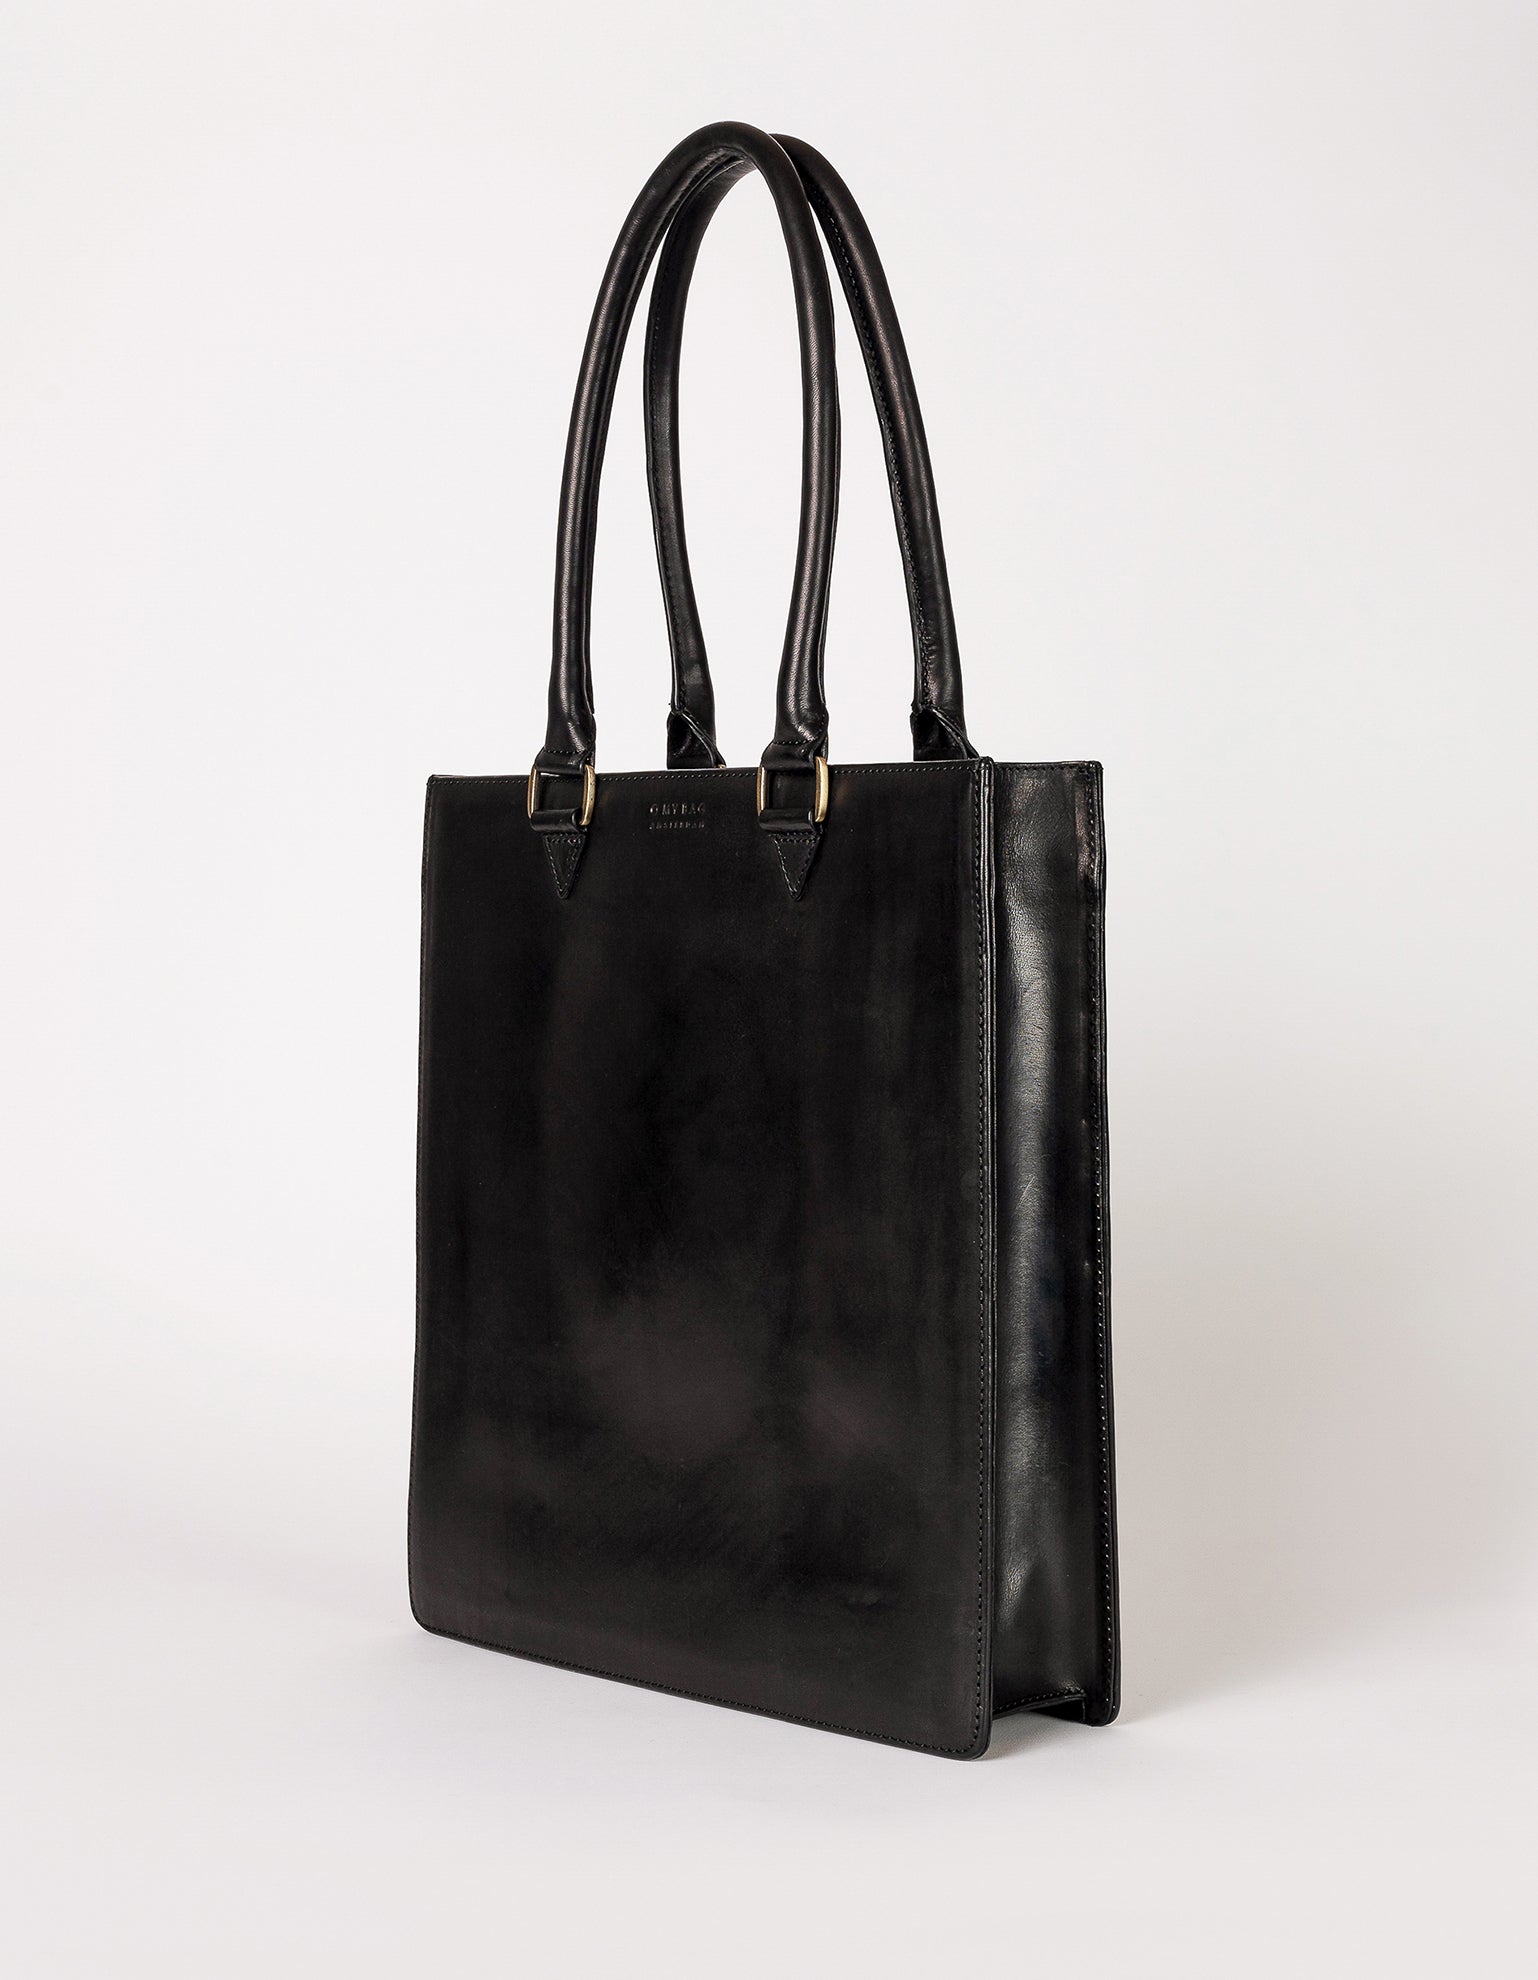 Mila Long Handle Black Classic Leather. Large rectangular shopper for women. Side product image.